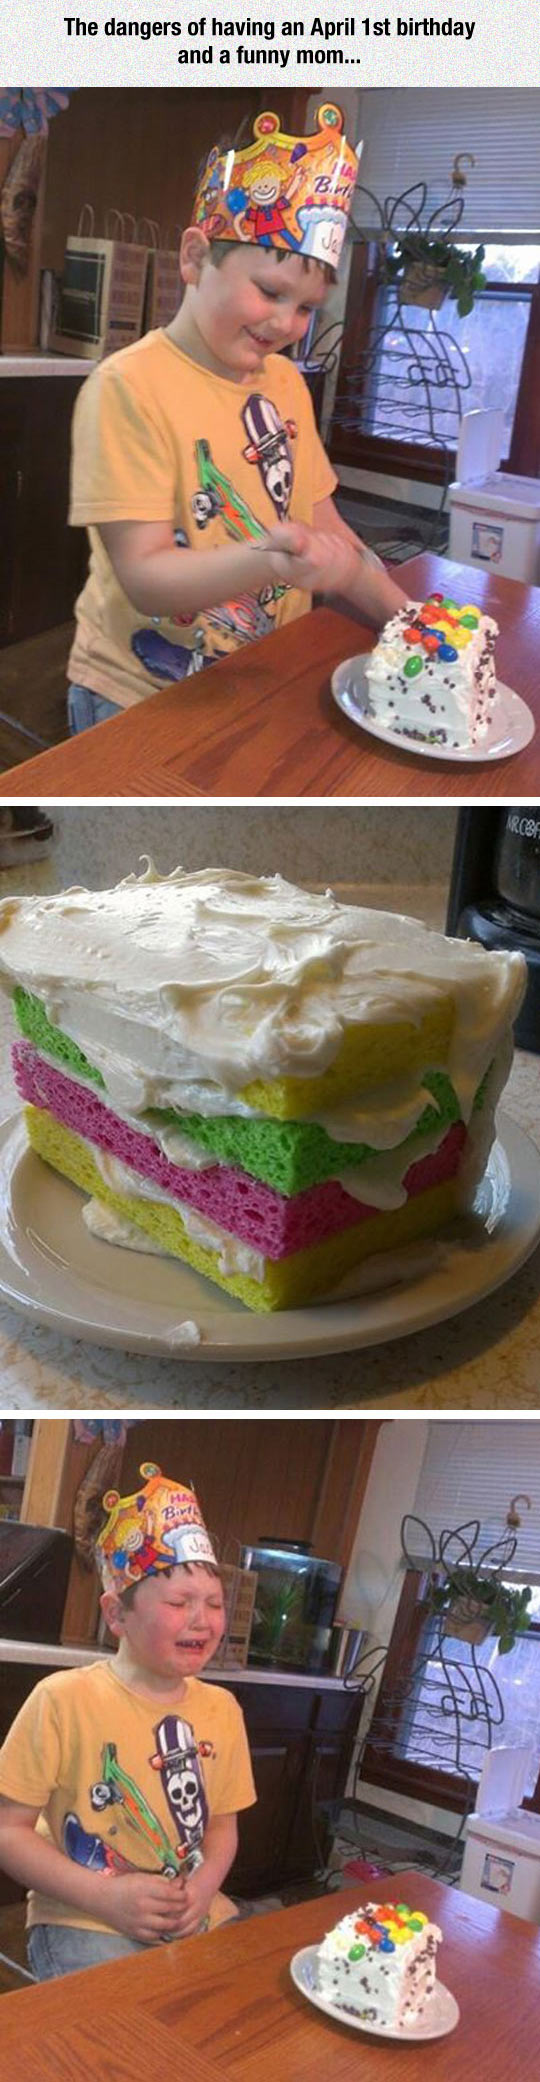 cool-kid-birthday-prank-cake-sponge-mom